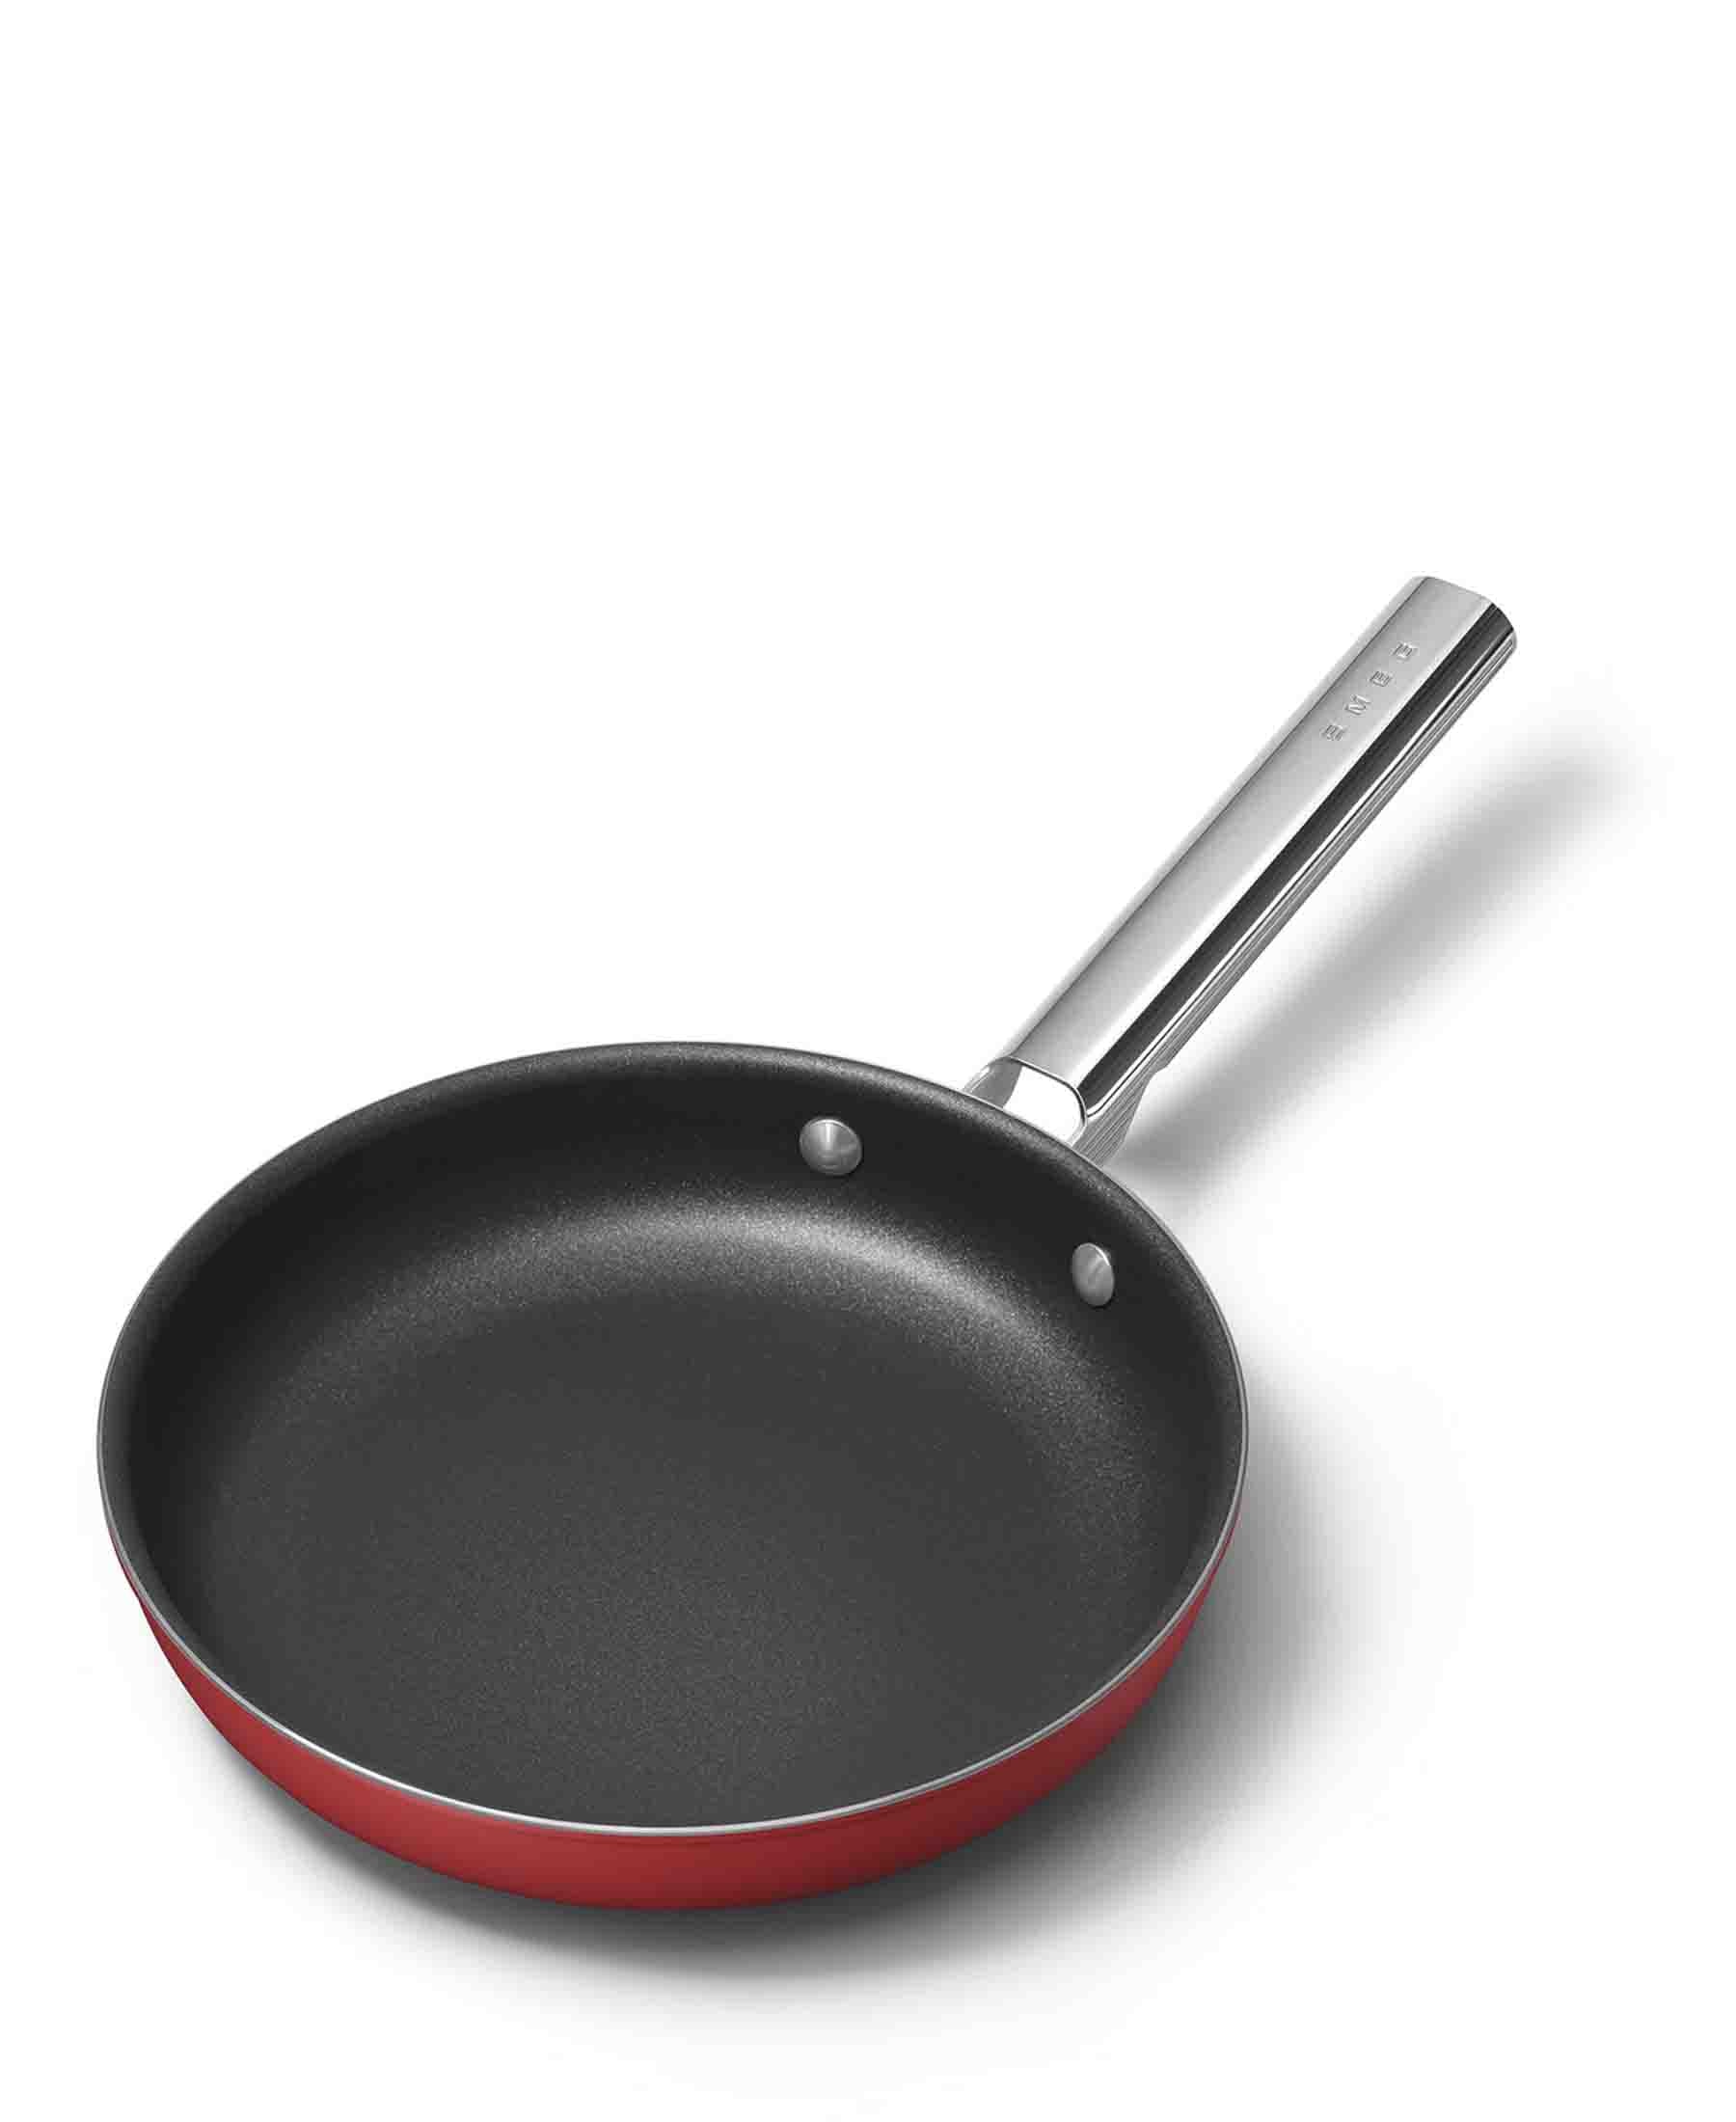 Smeg 24cm Frying Pan - Red